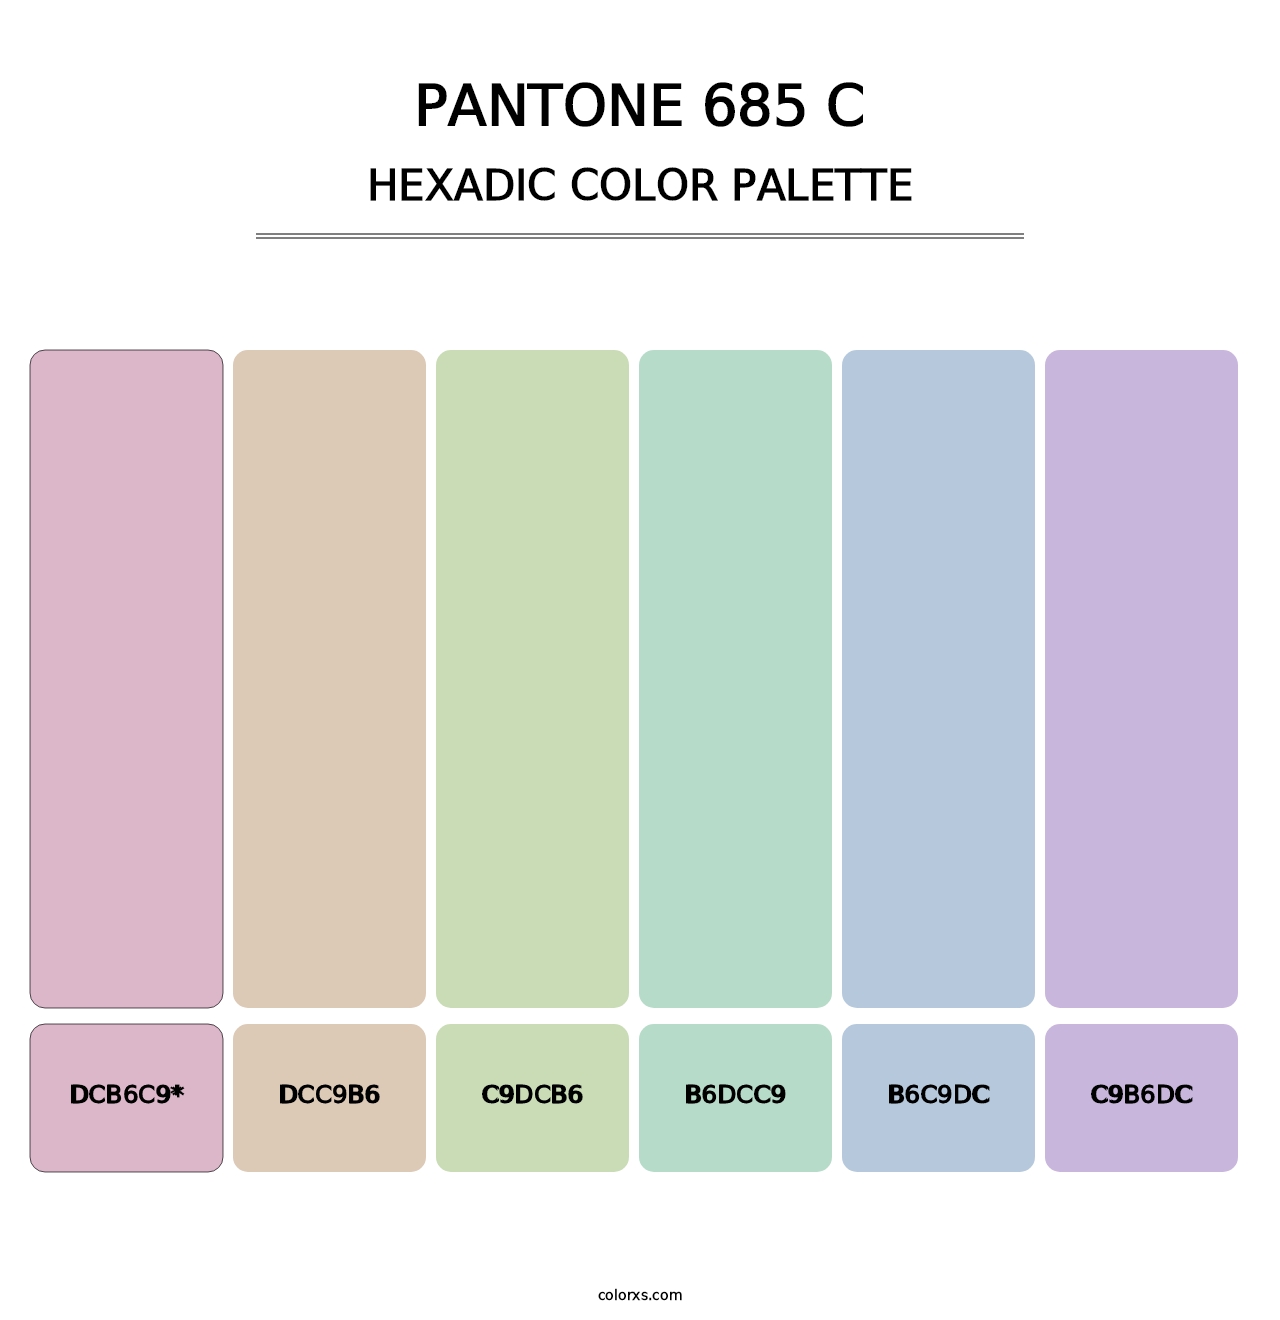 PANTONE 685 C - Hexadic Color Palette